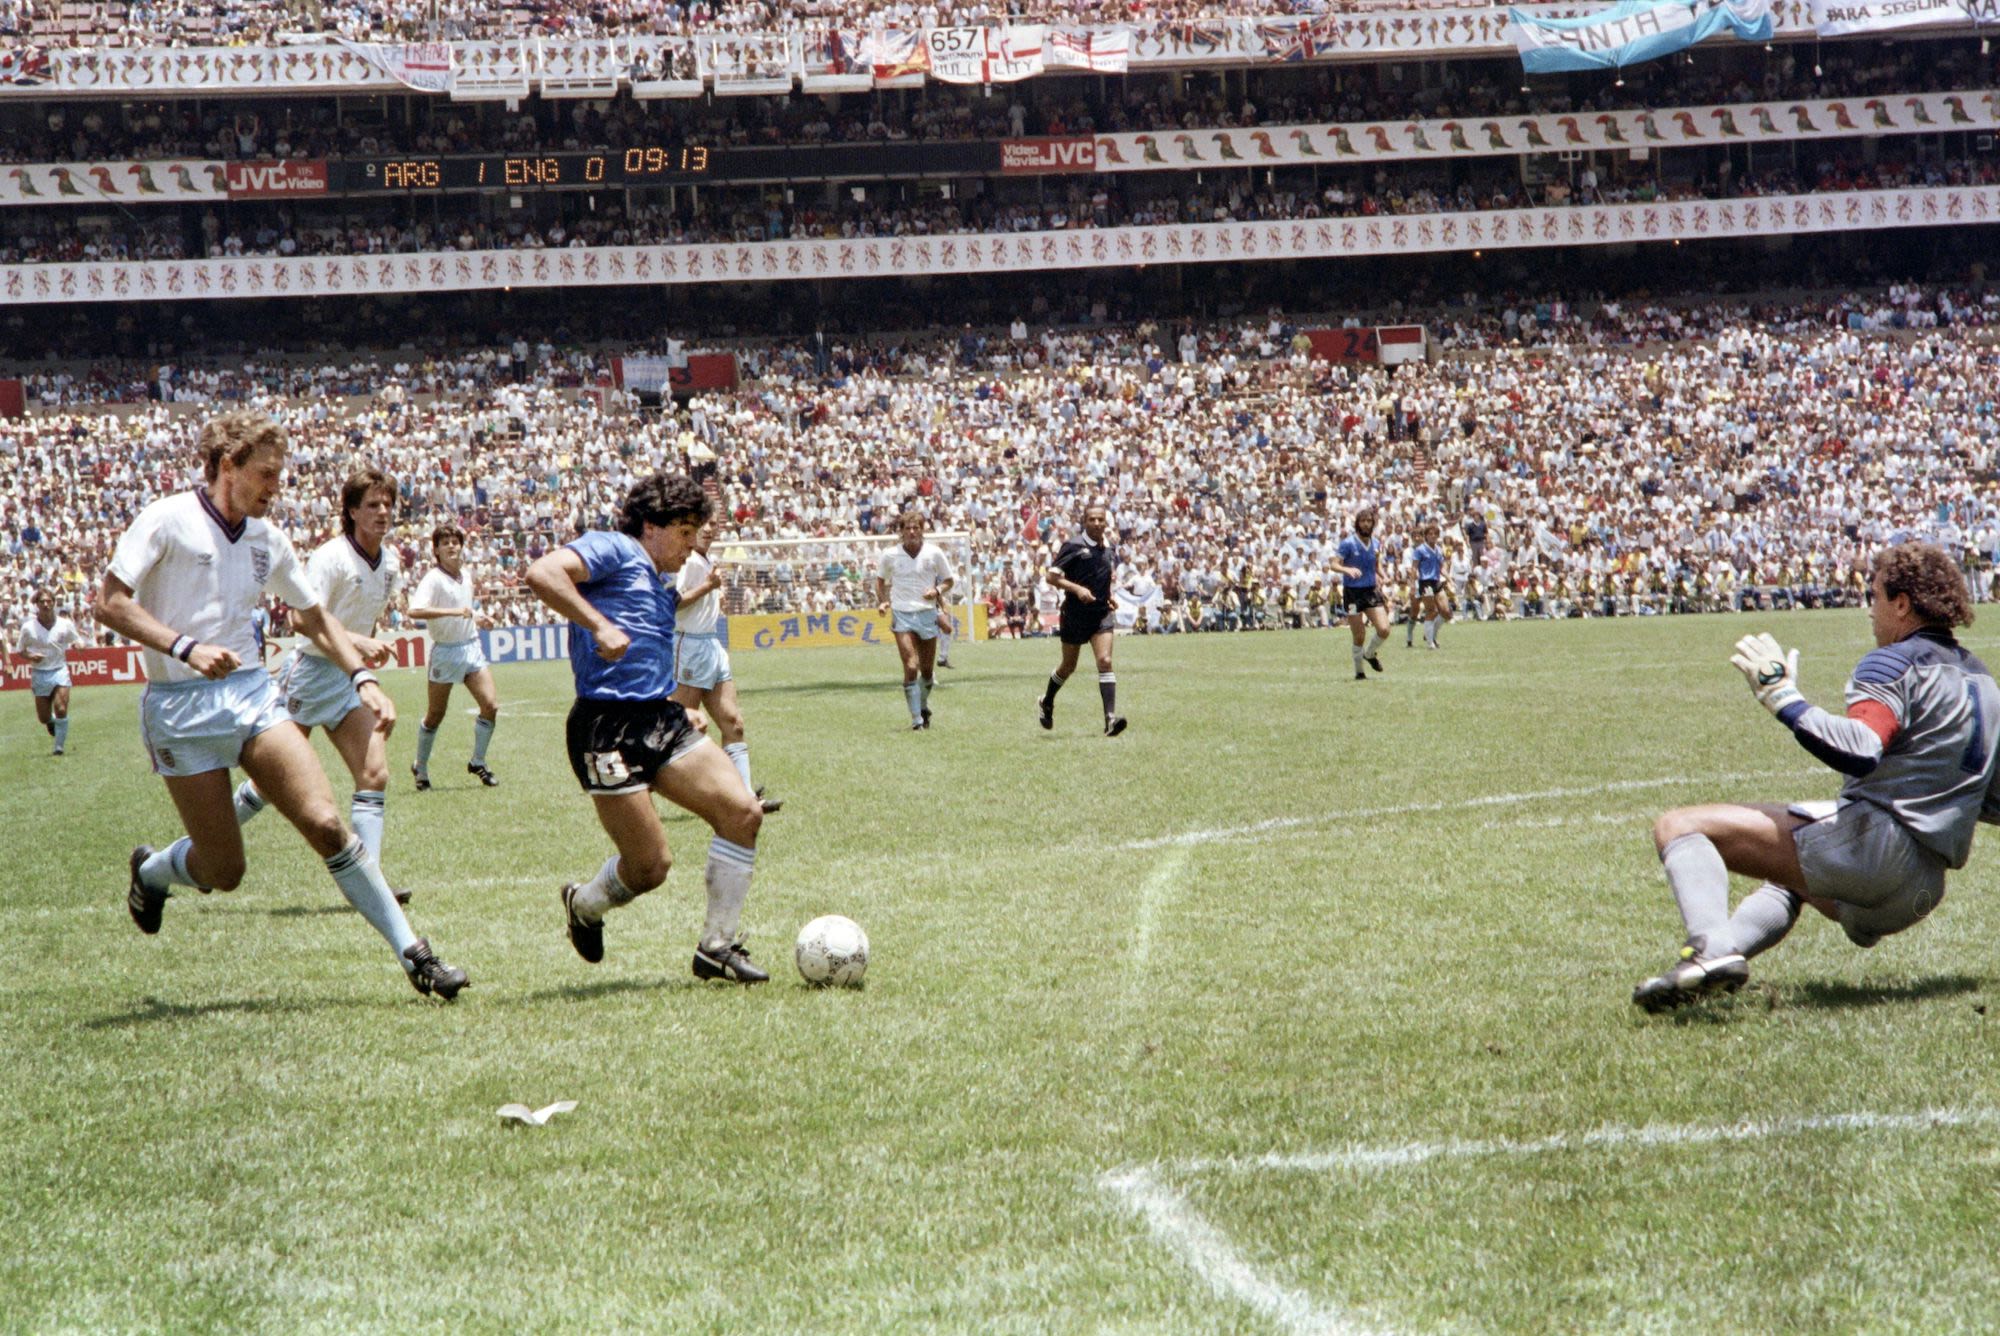 Soccer legend Diego Maradona's 'Hand of God' shirt sets auction record